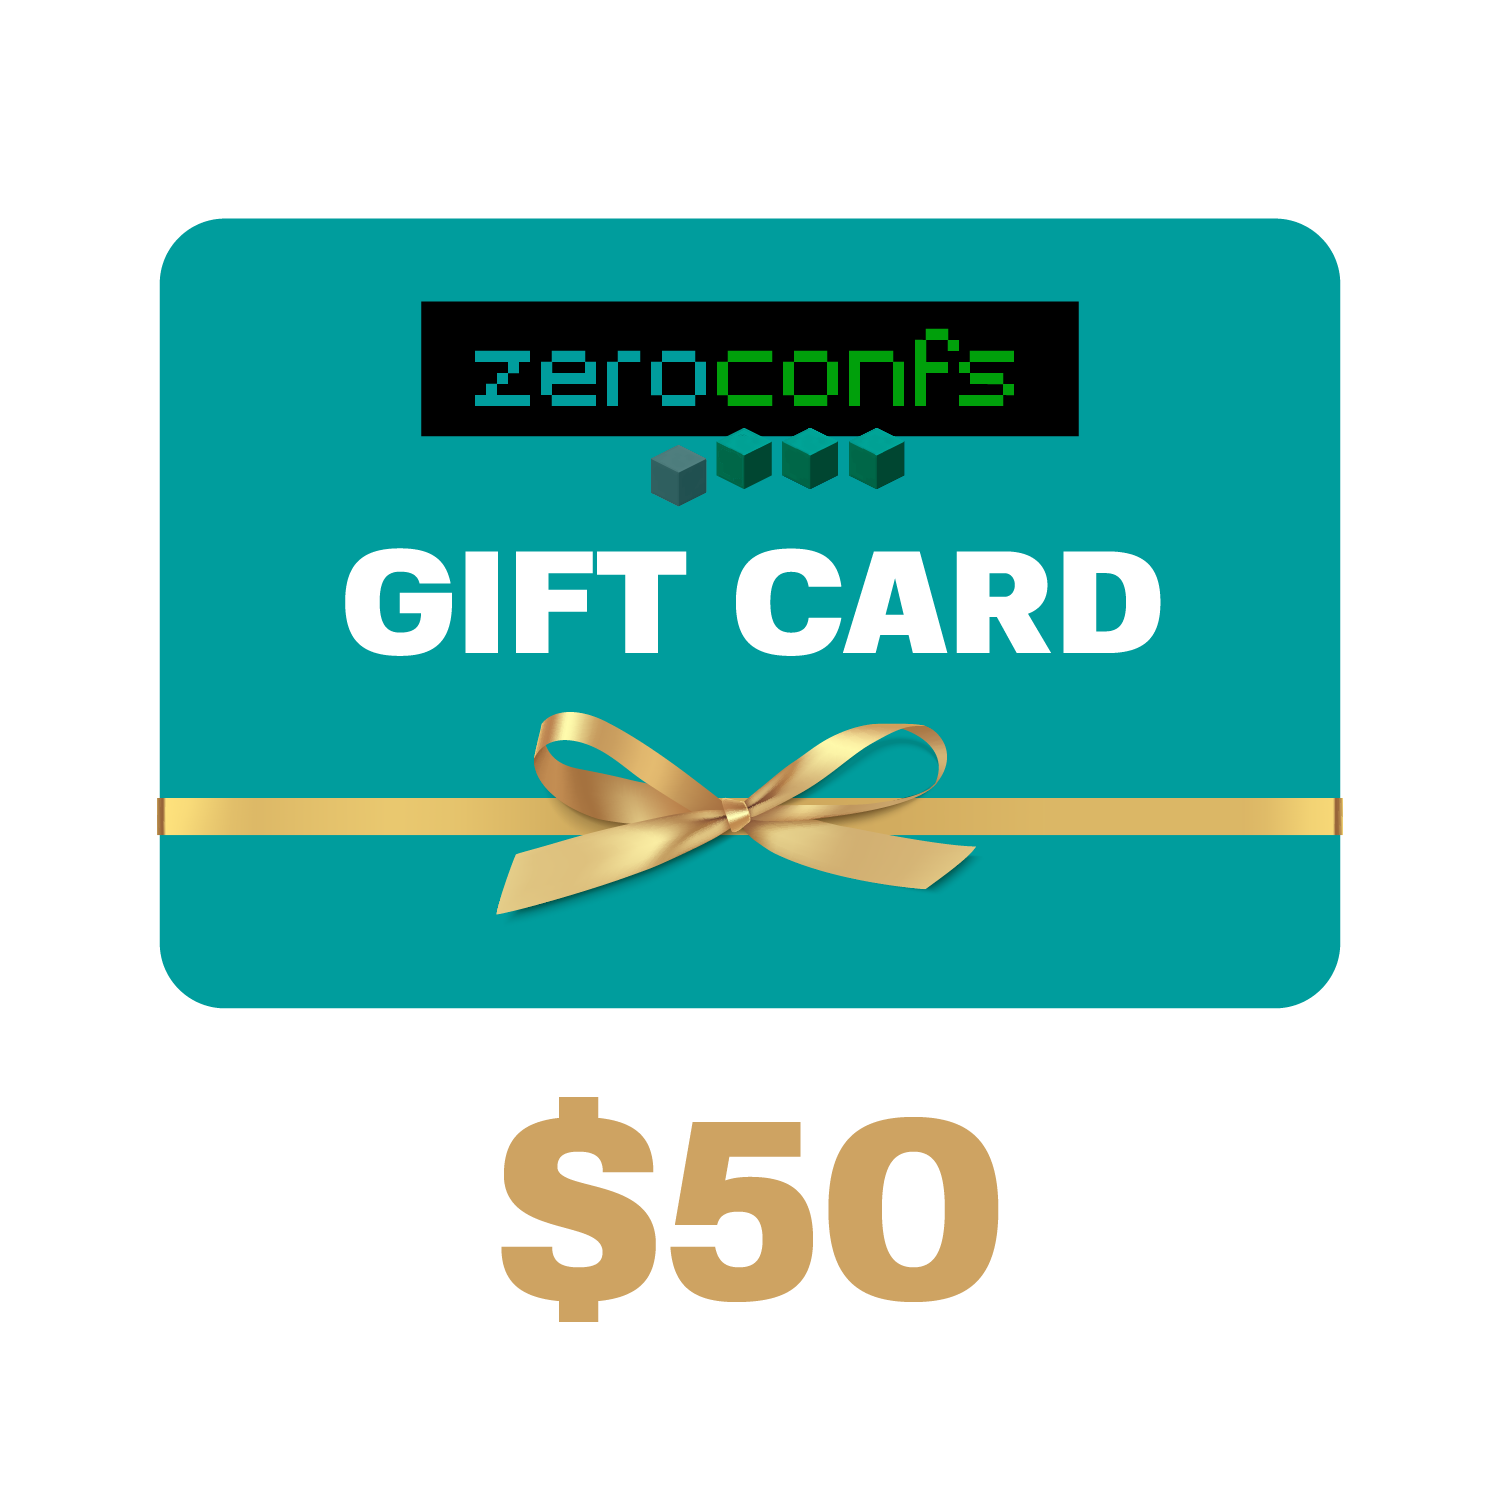 Gift Card Gift Cards zeroconfs $50 USD  